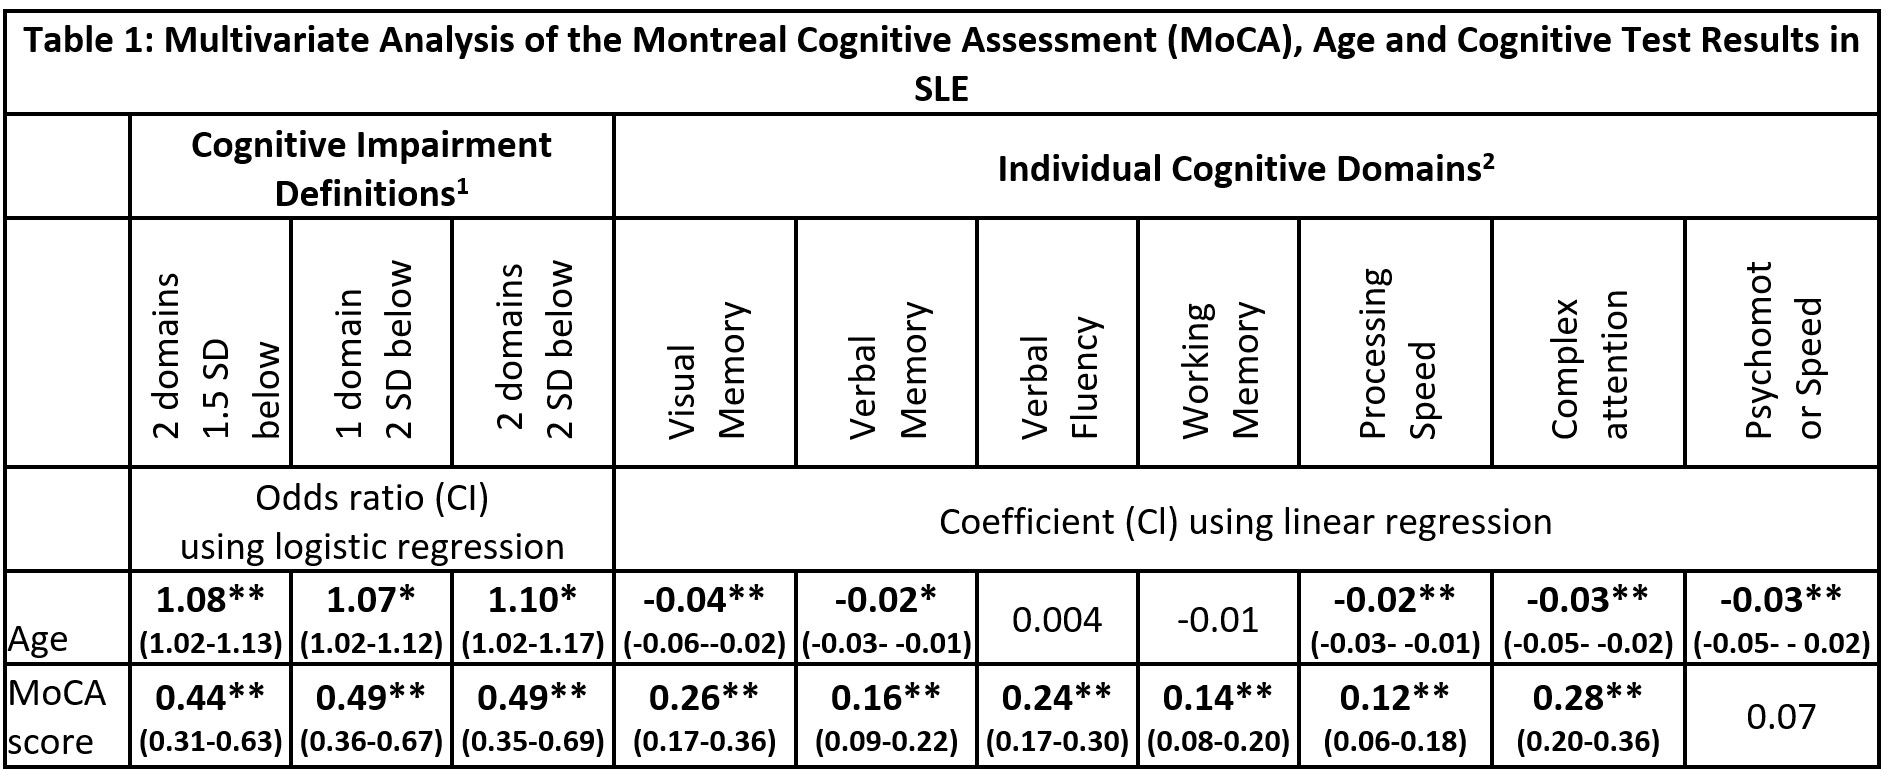 moca cognitive test cutoff scores